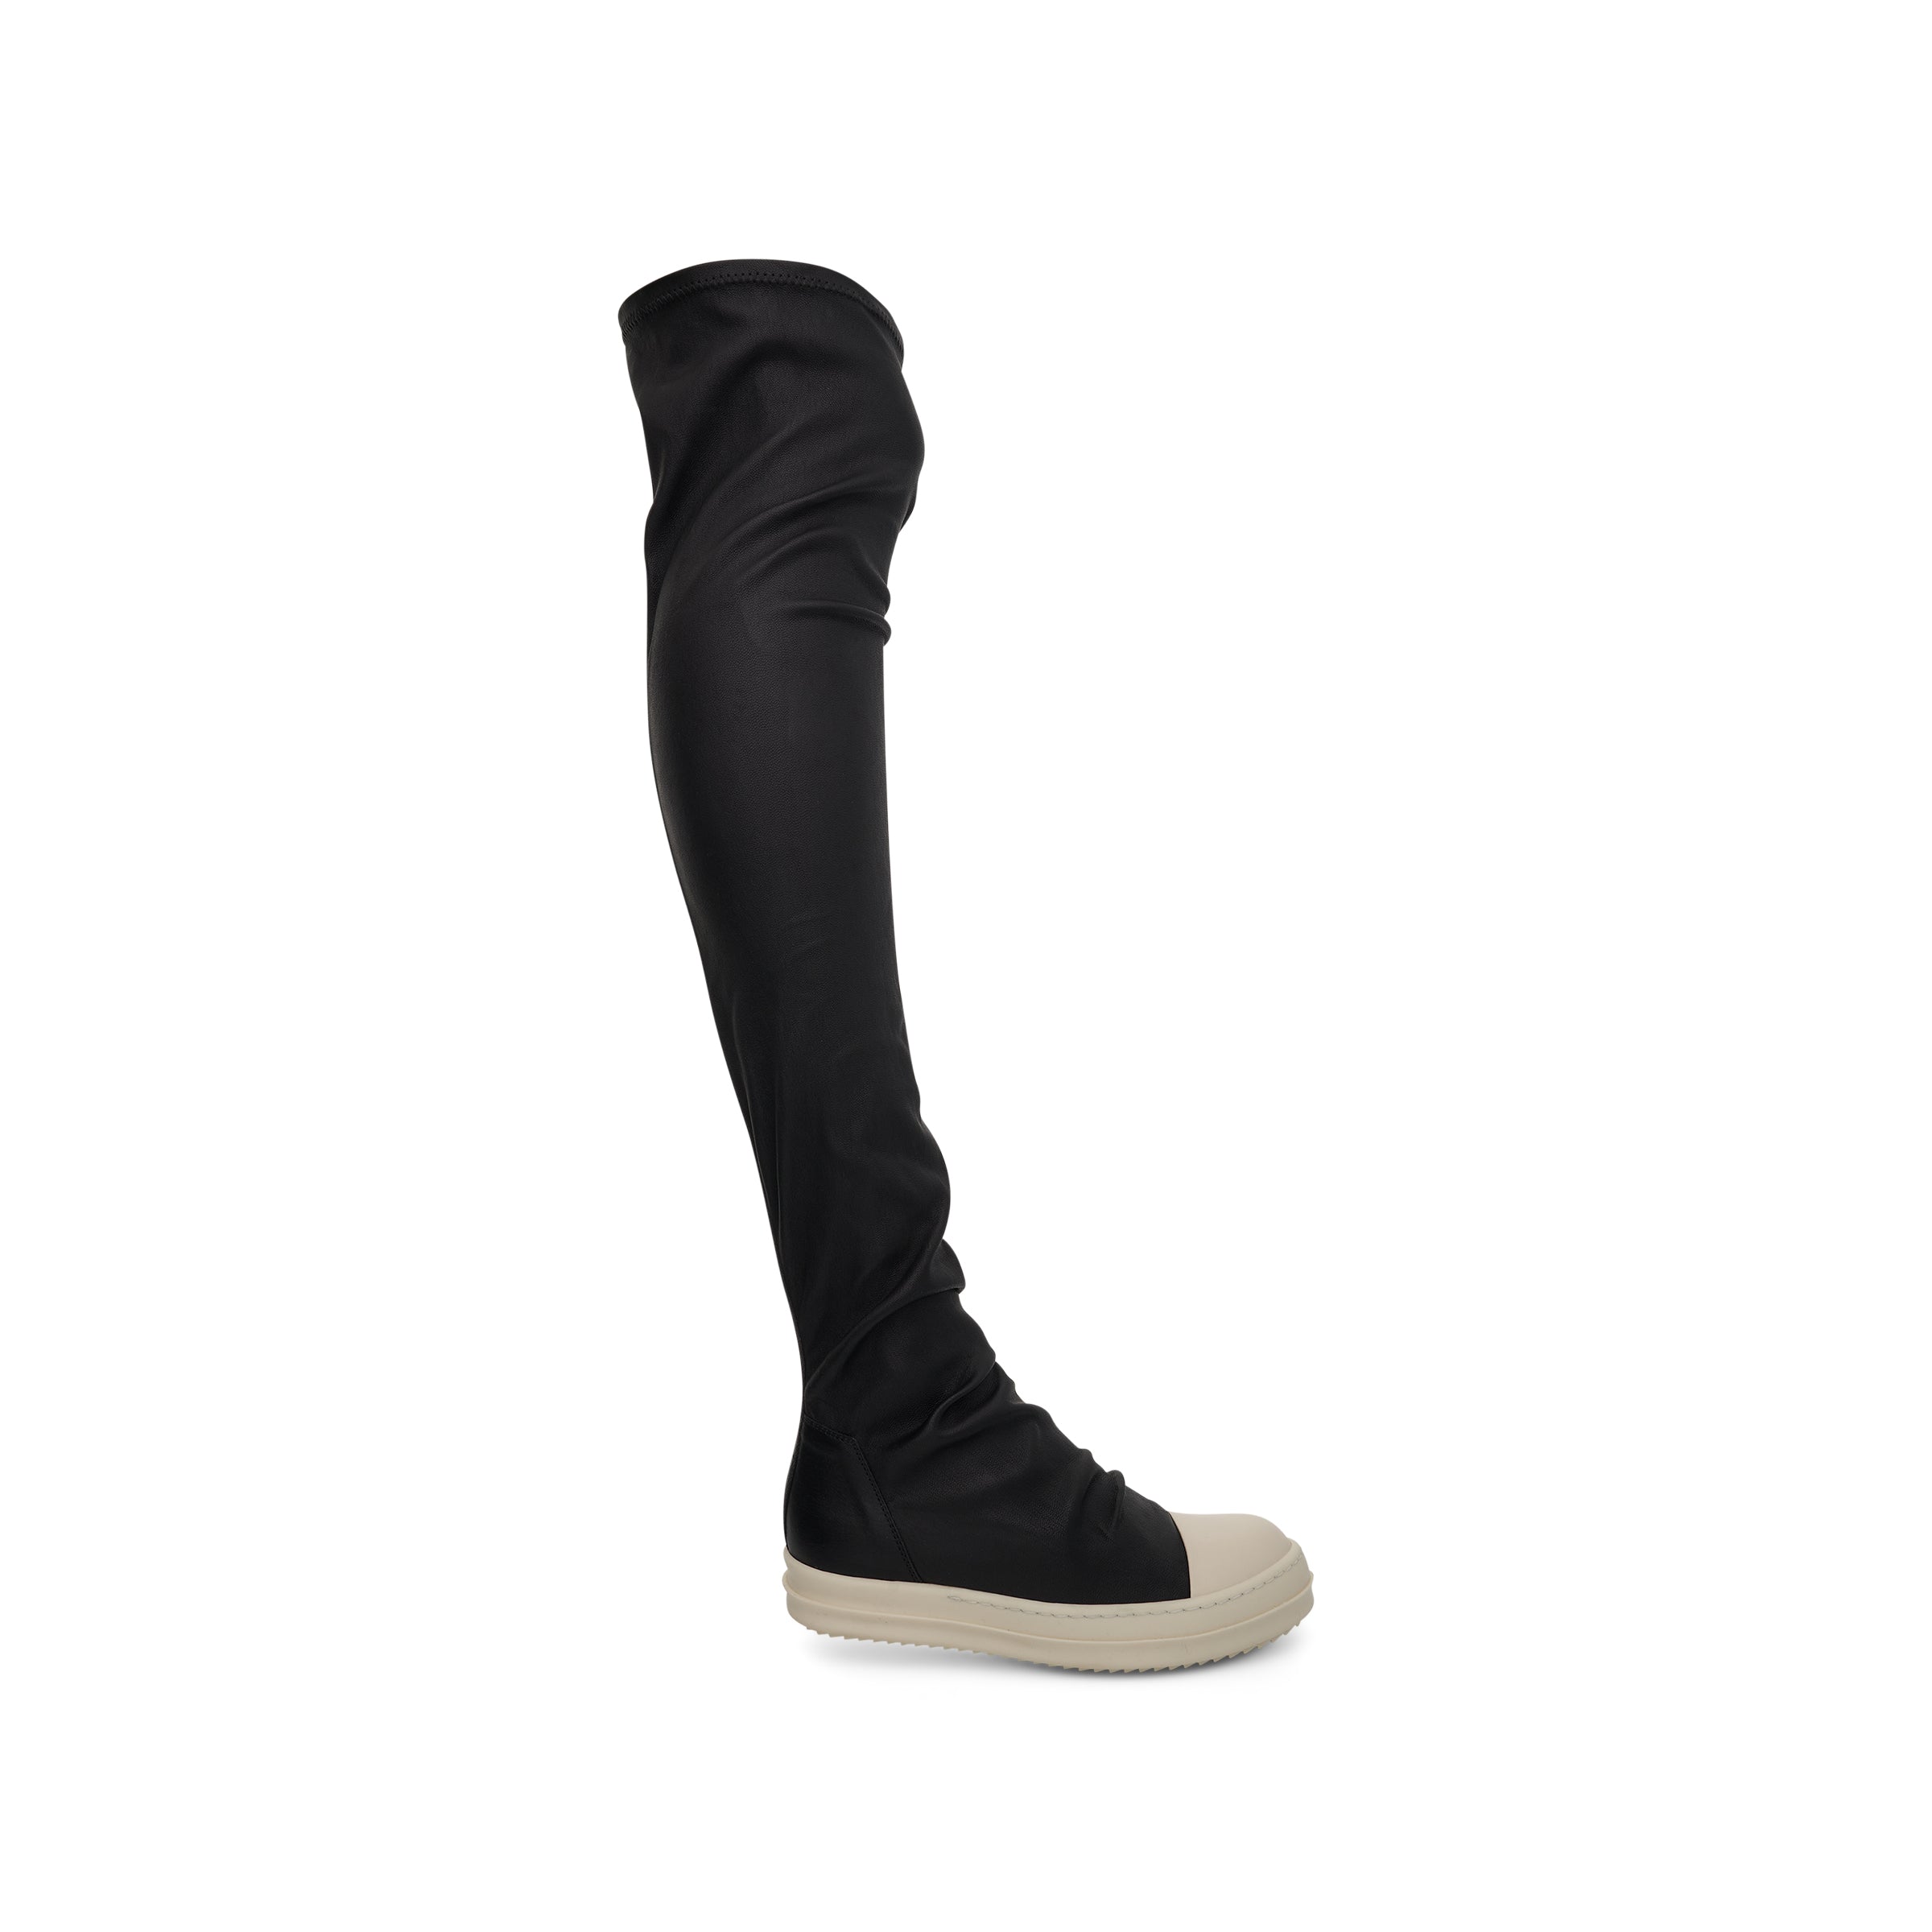 RICK OWENS Knee High Stocking Sneaker Boots in Black/Milk – MARAIS